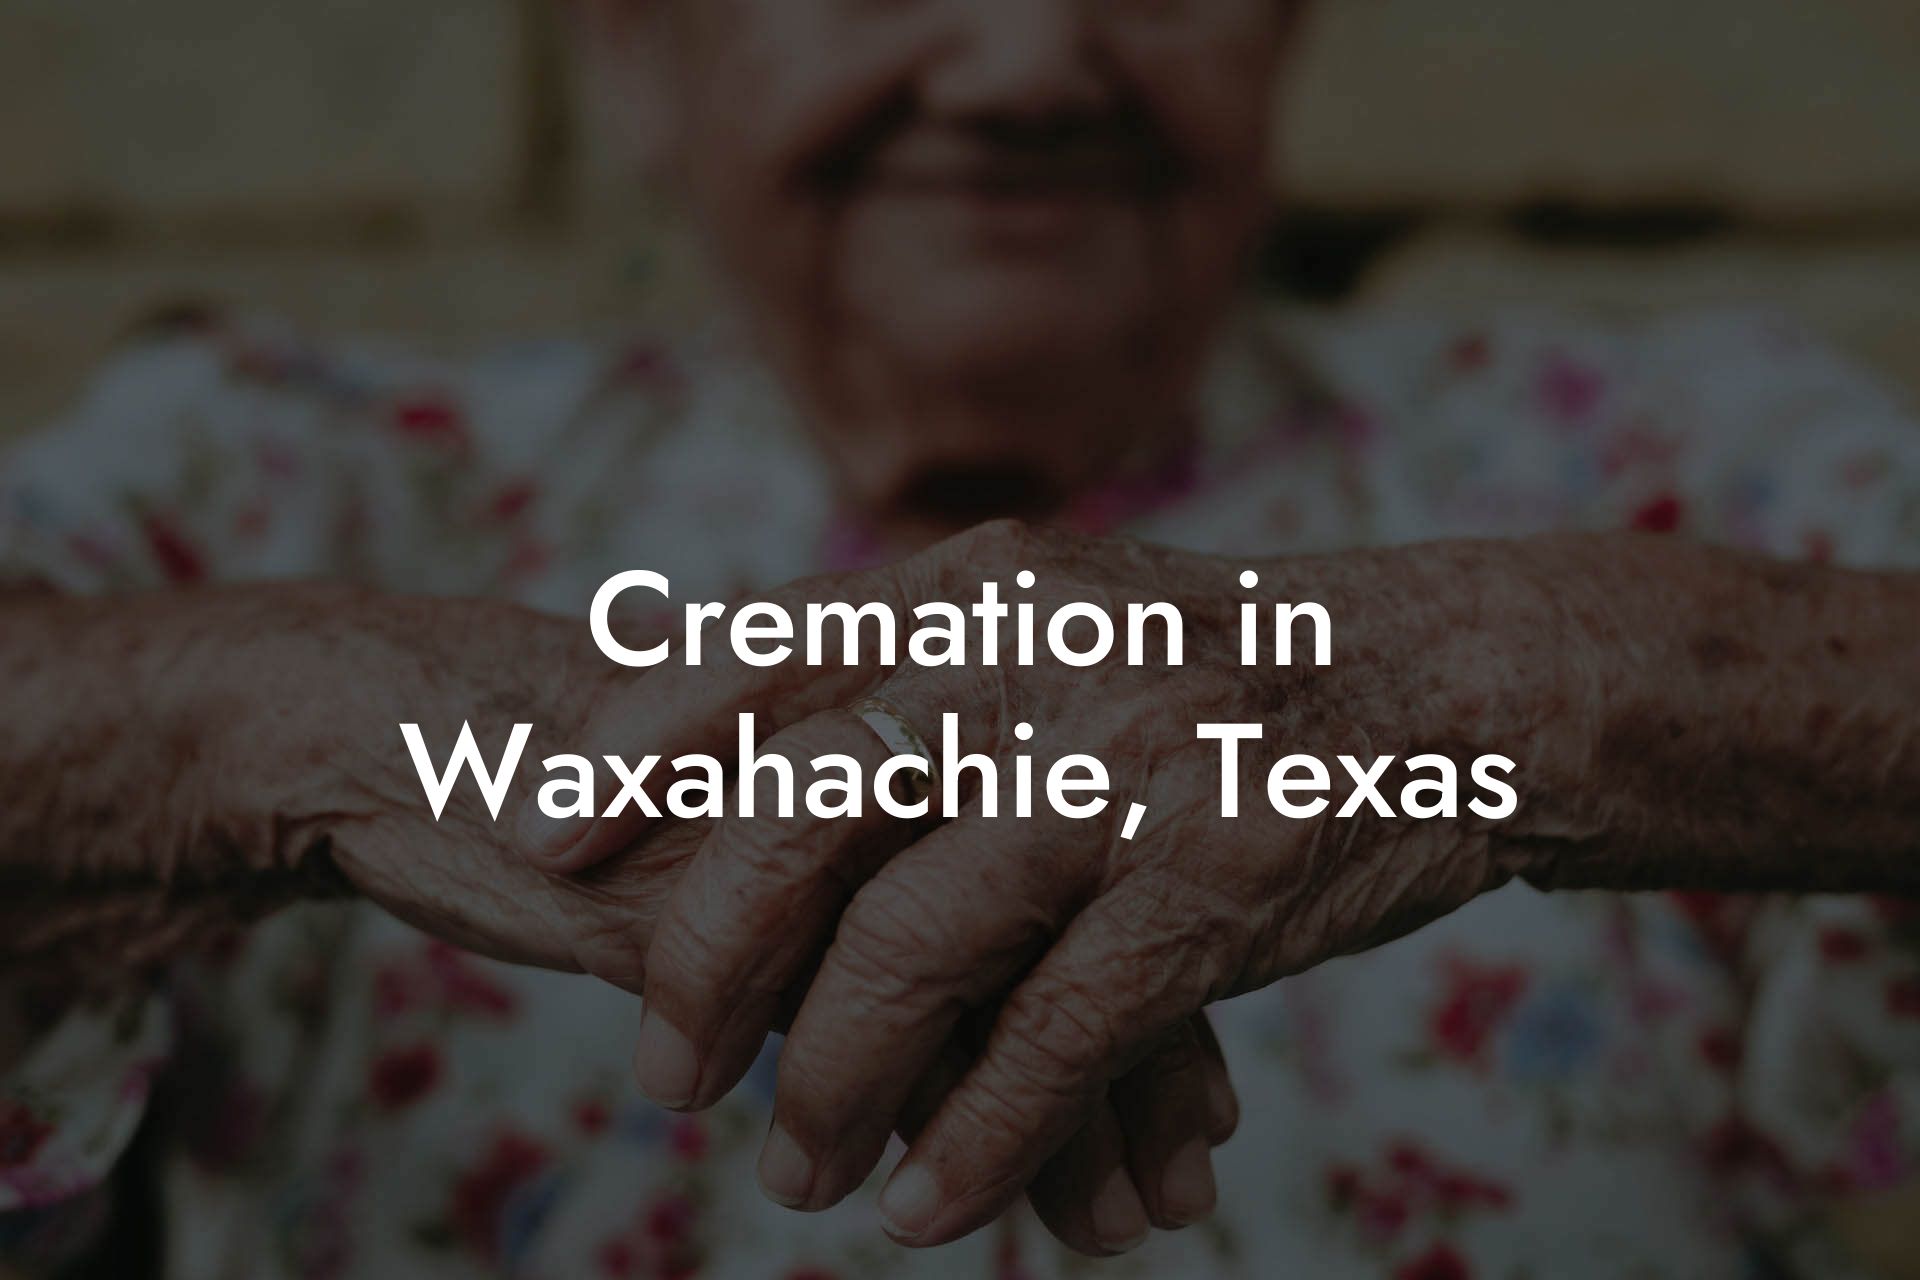 Cremation in Waxahachie, Texas